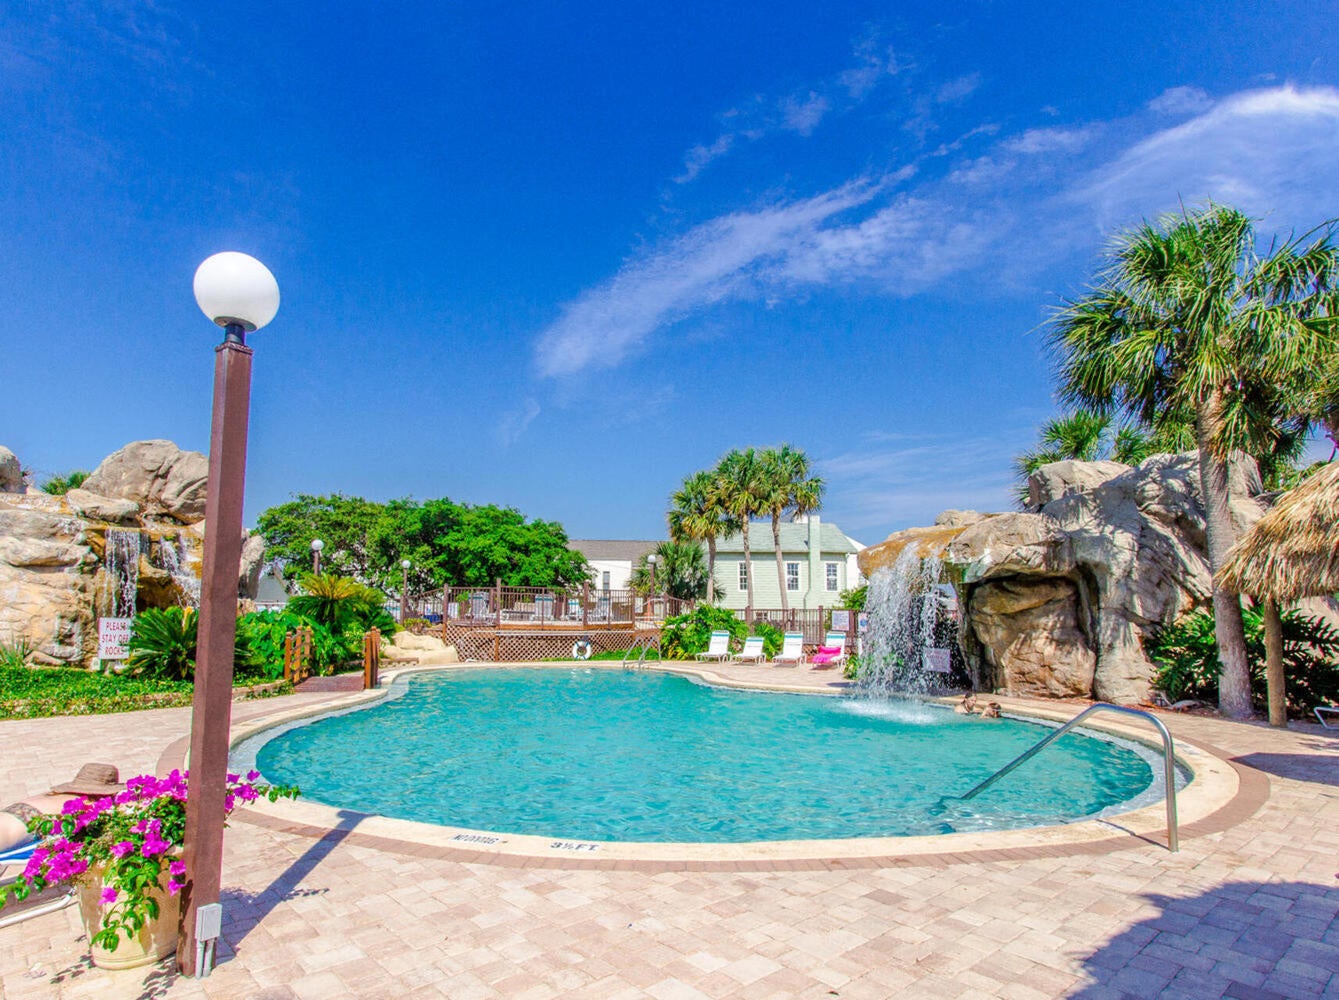 Portside Resort pool